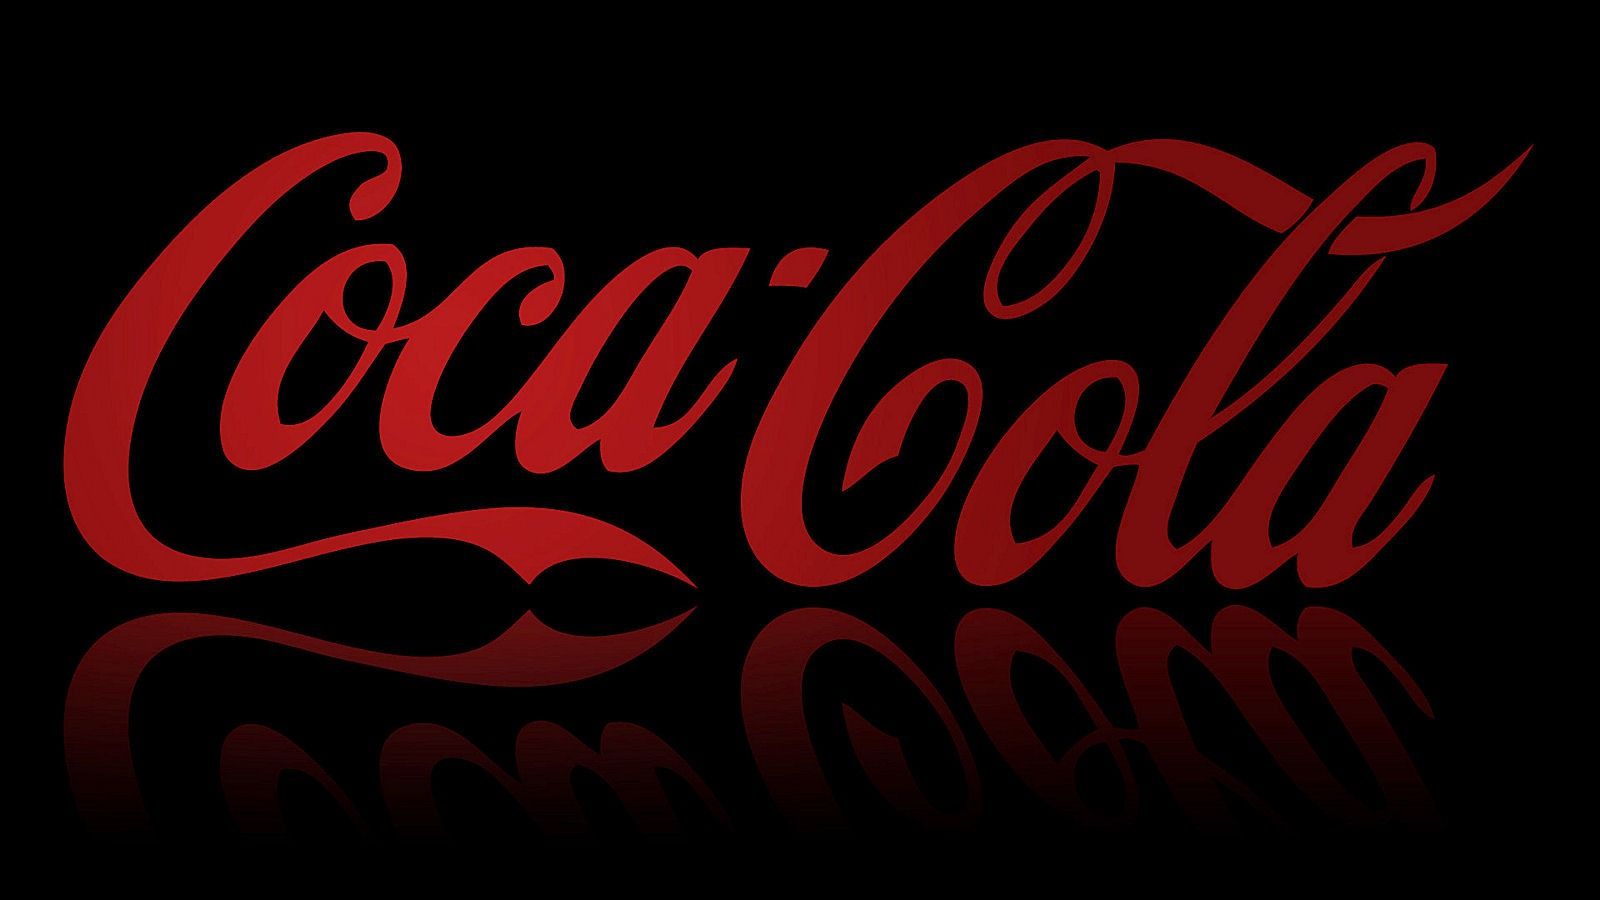 HD Coca Cola Wallpaper and Background